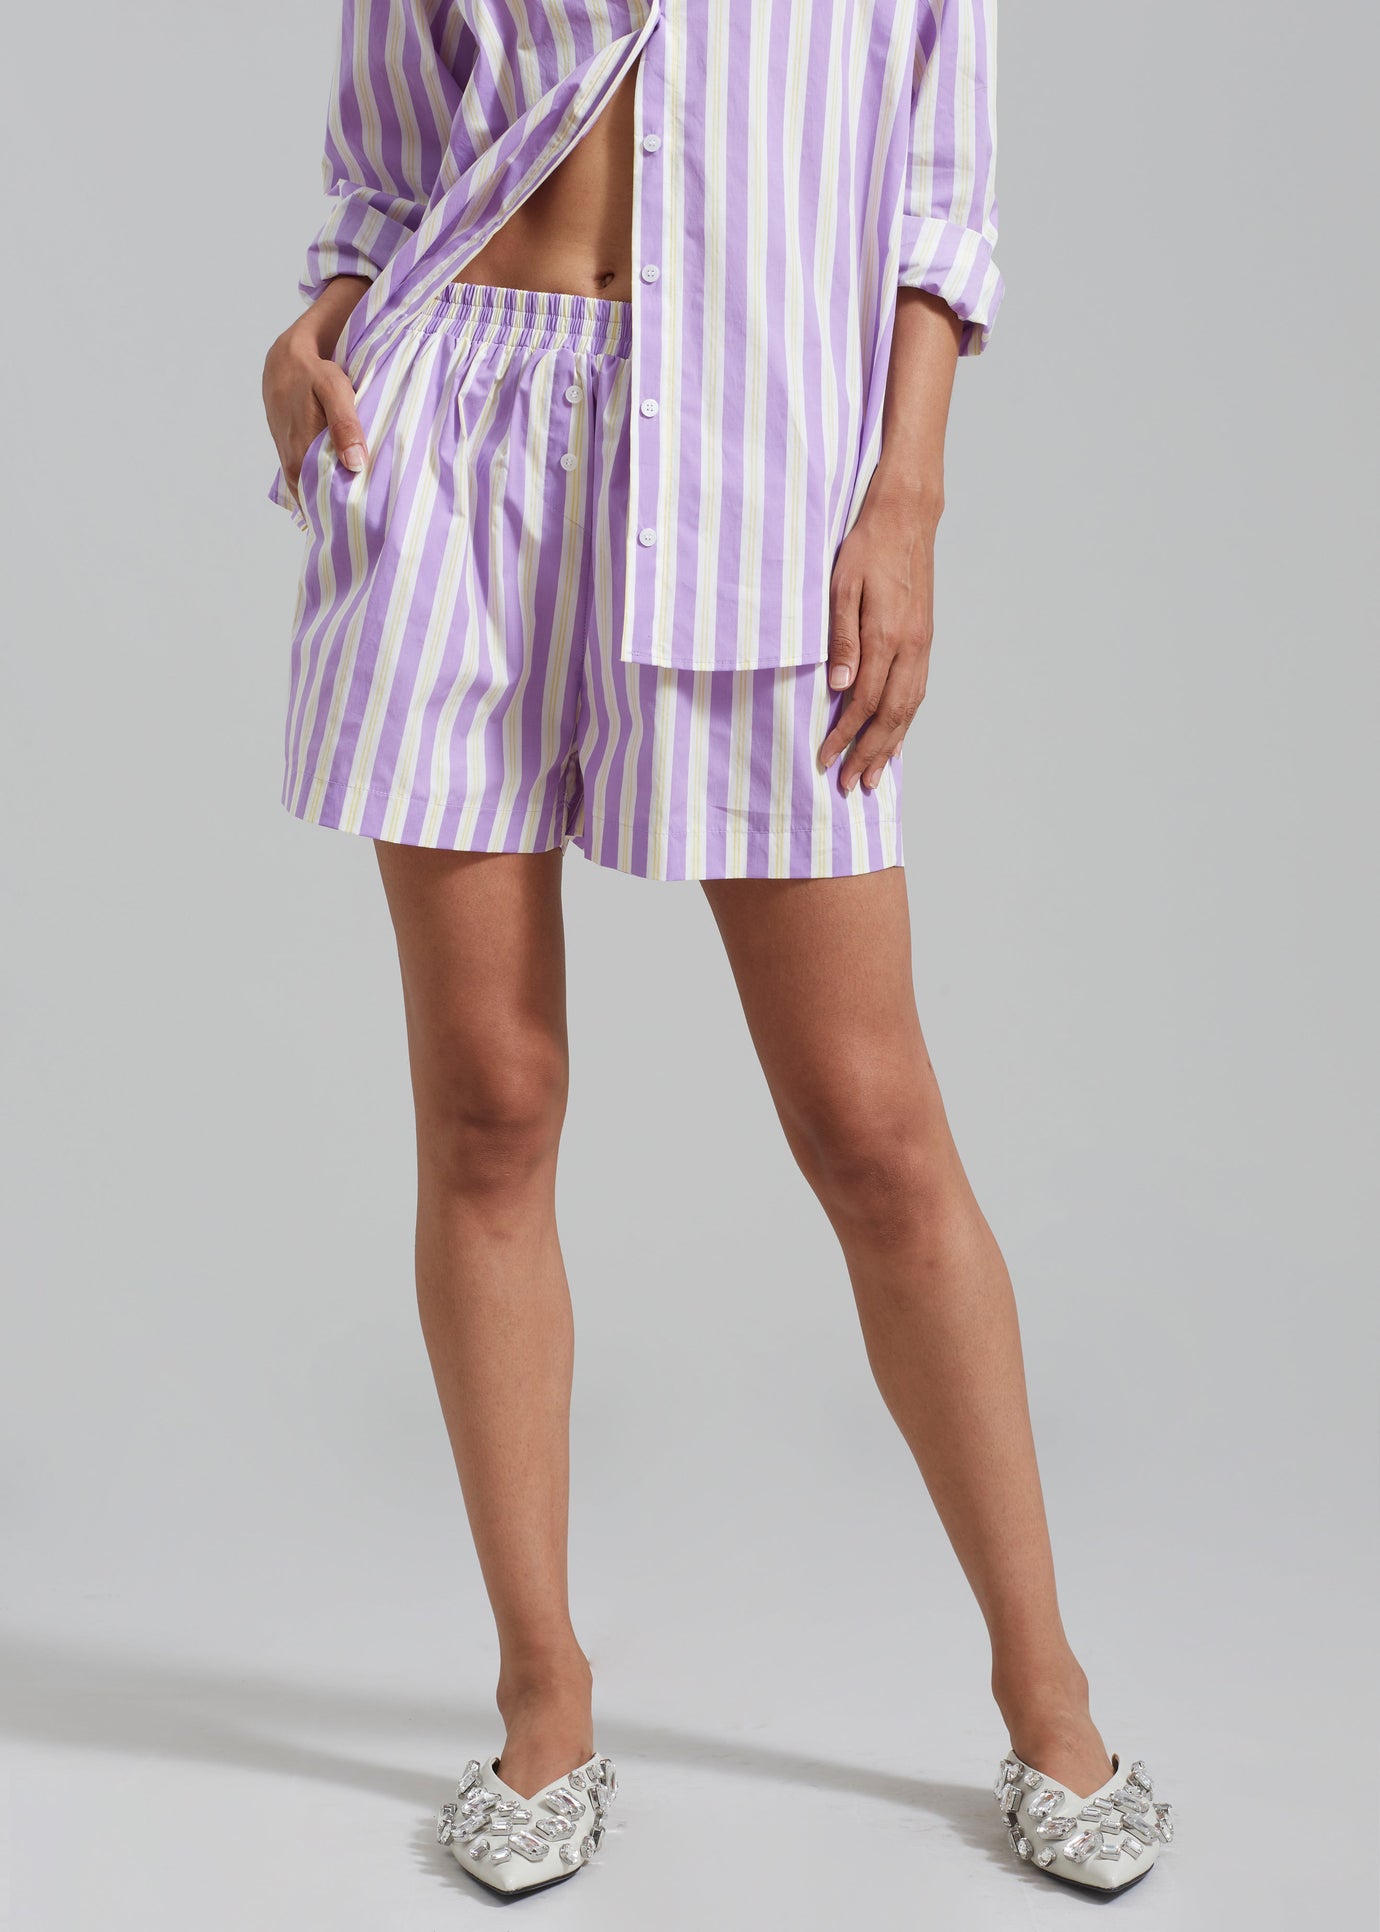 Juno Boxer Shorts - Violet Stripe - 1